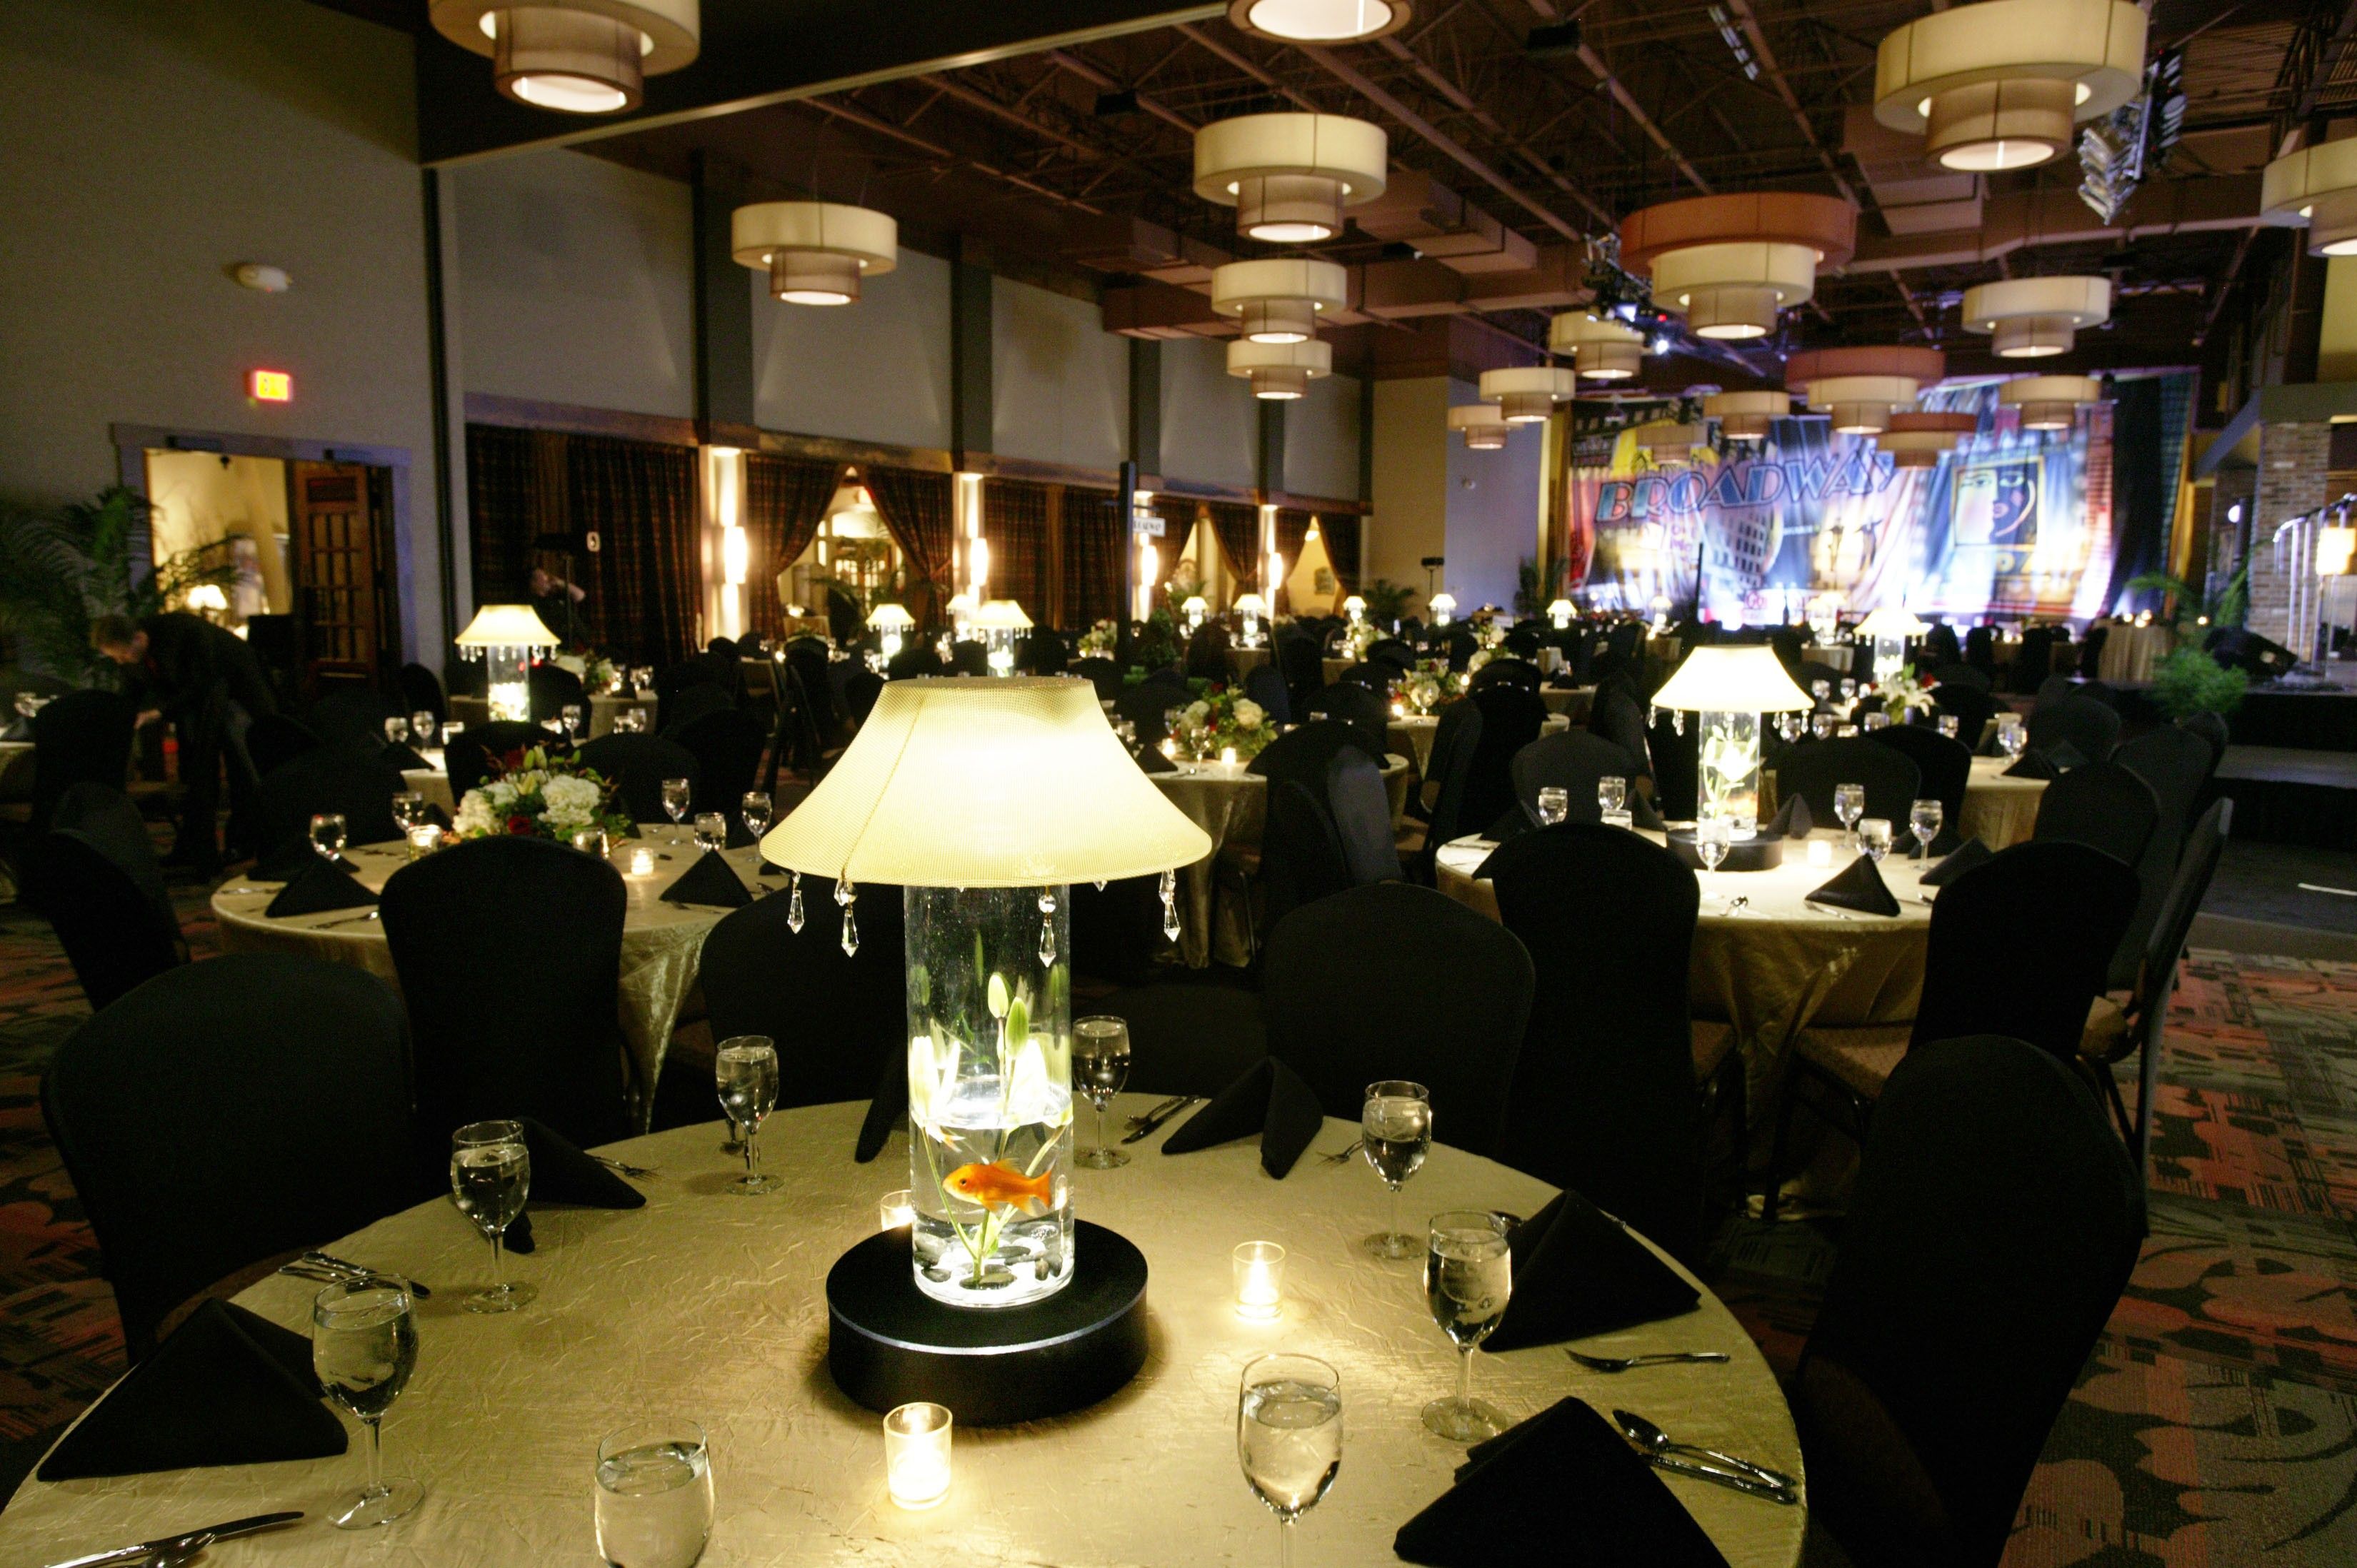 Oscar Event Center dining area with fish center pieces